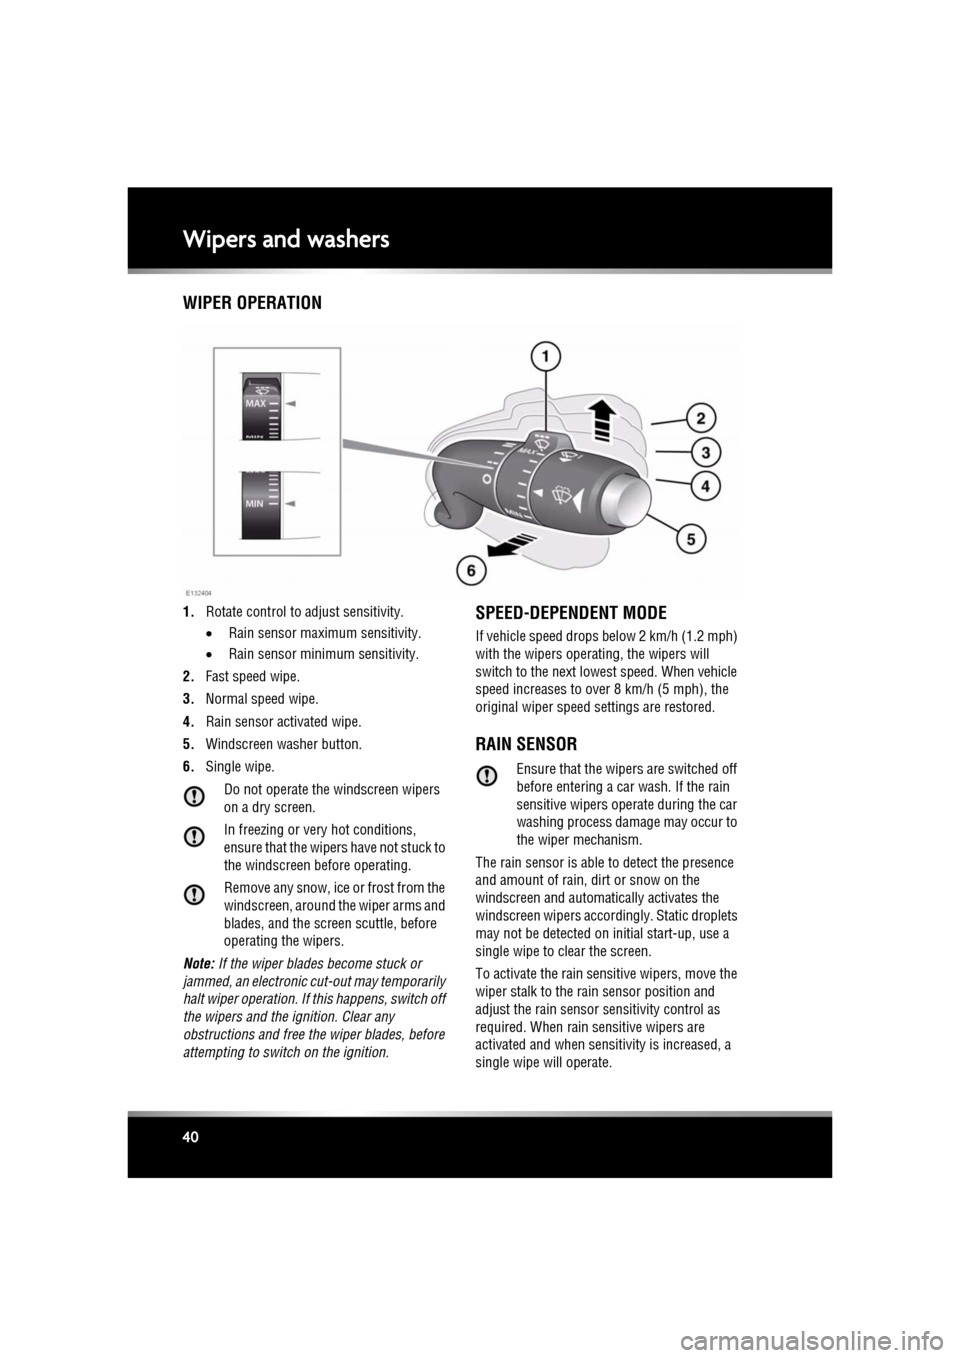 JAGUAR XF 2010 1.G Owners Guide L
(FM8) SEMCON JLR OWNER GUIDE VER 1.00  EURO
LANGUAGE: english-en; MARQUE: jaguar; MODEL: XF
Wipers and washers
40
Wipers and washersWIPER OPERATION
1. Rotate control to adjust sensitivity.
•Rain s